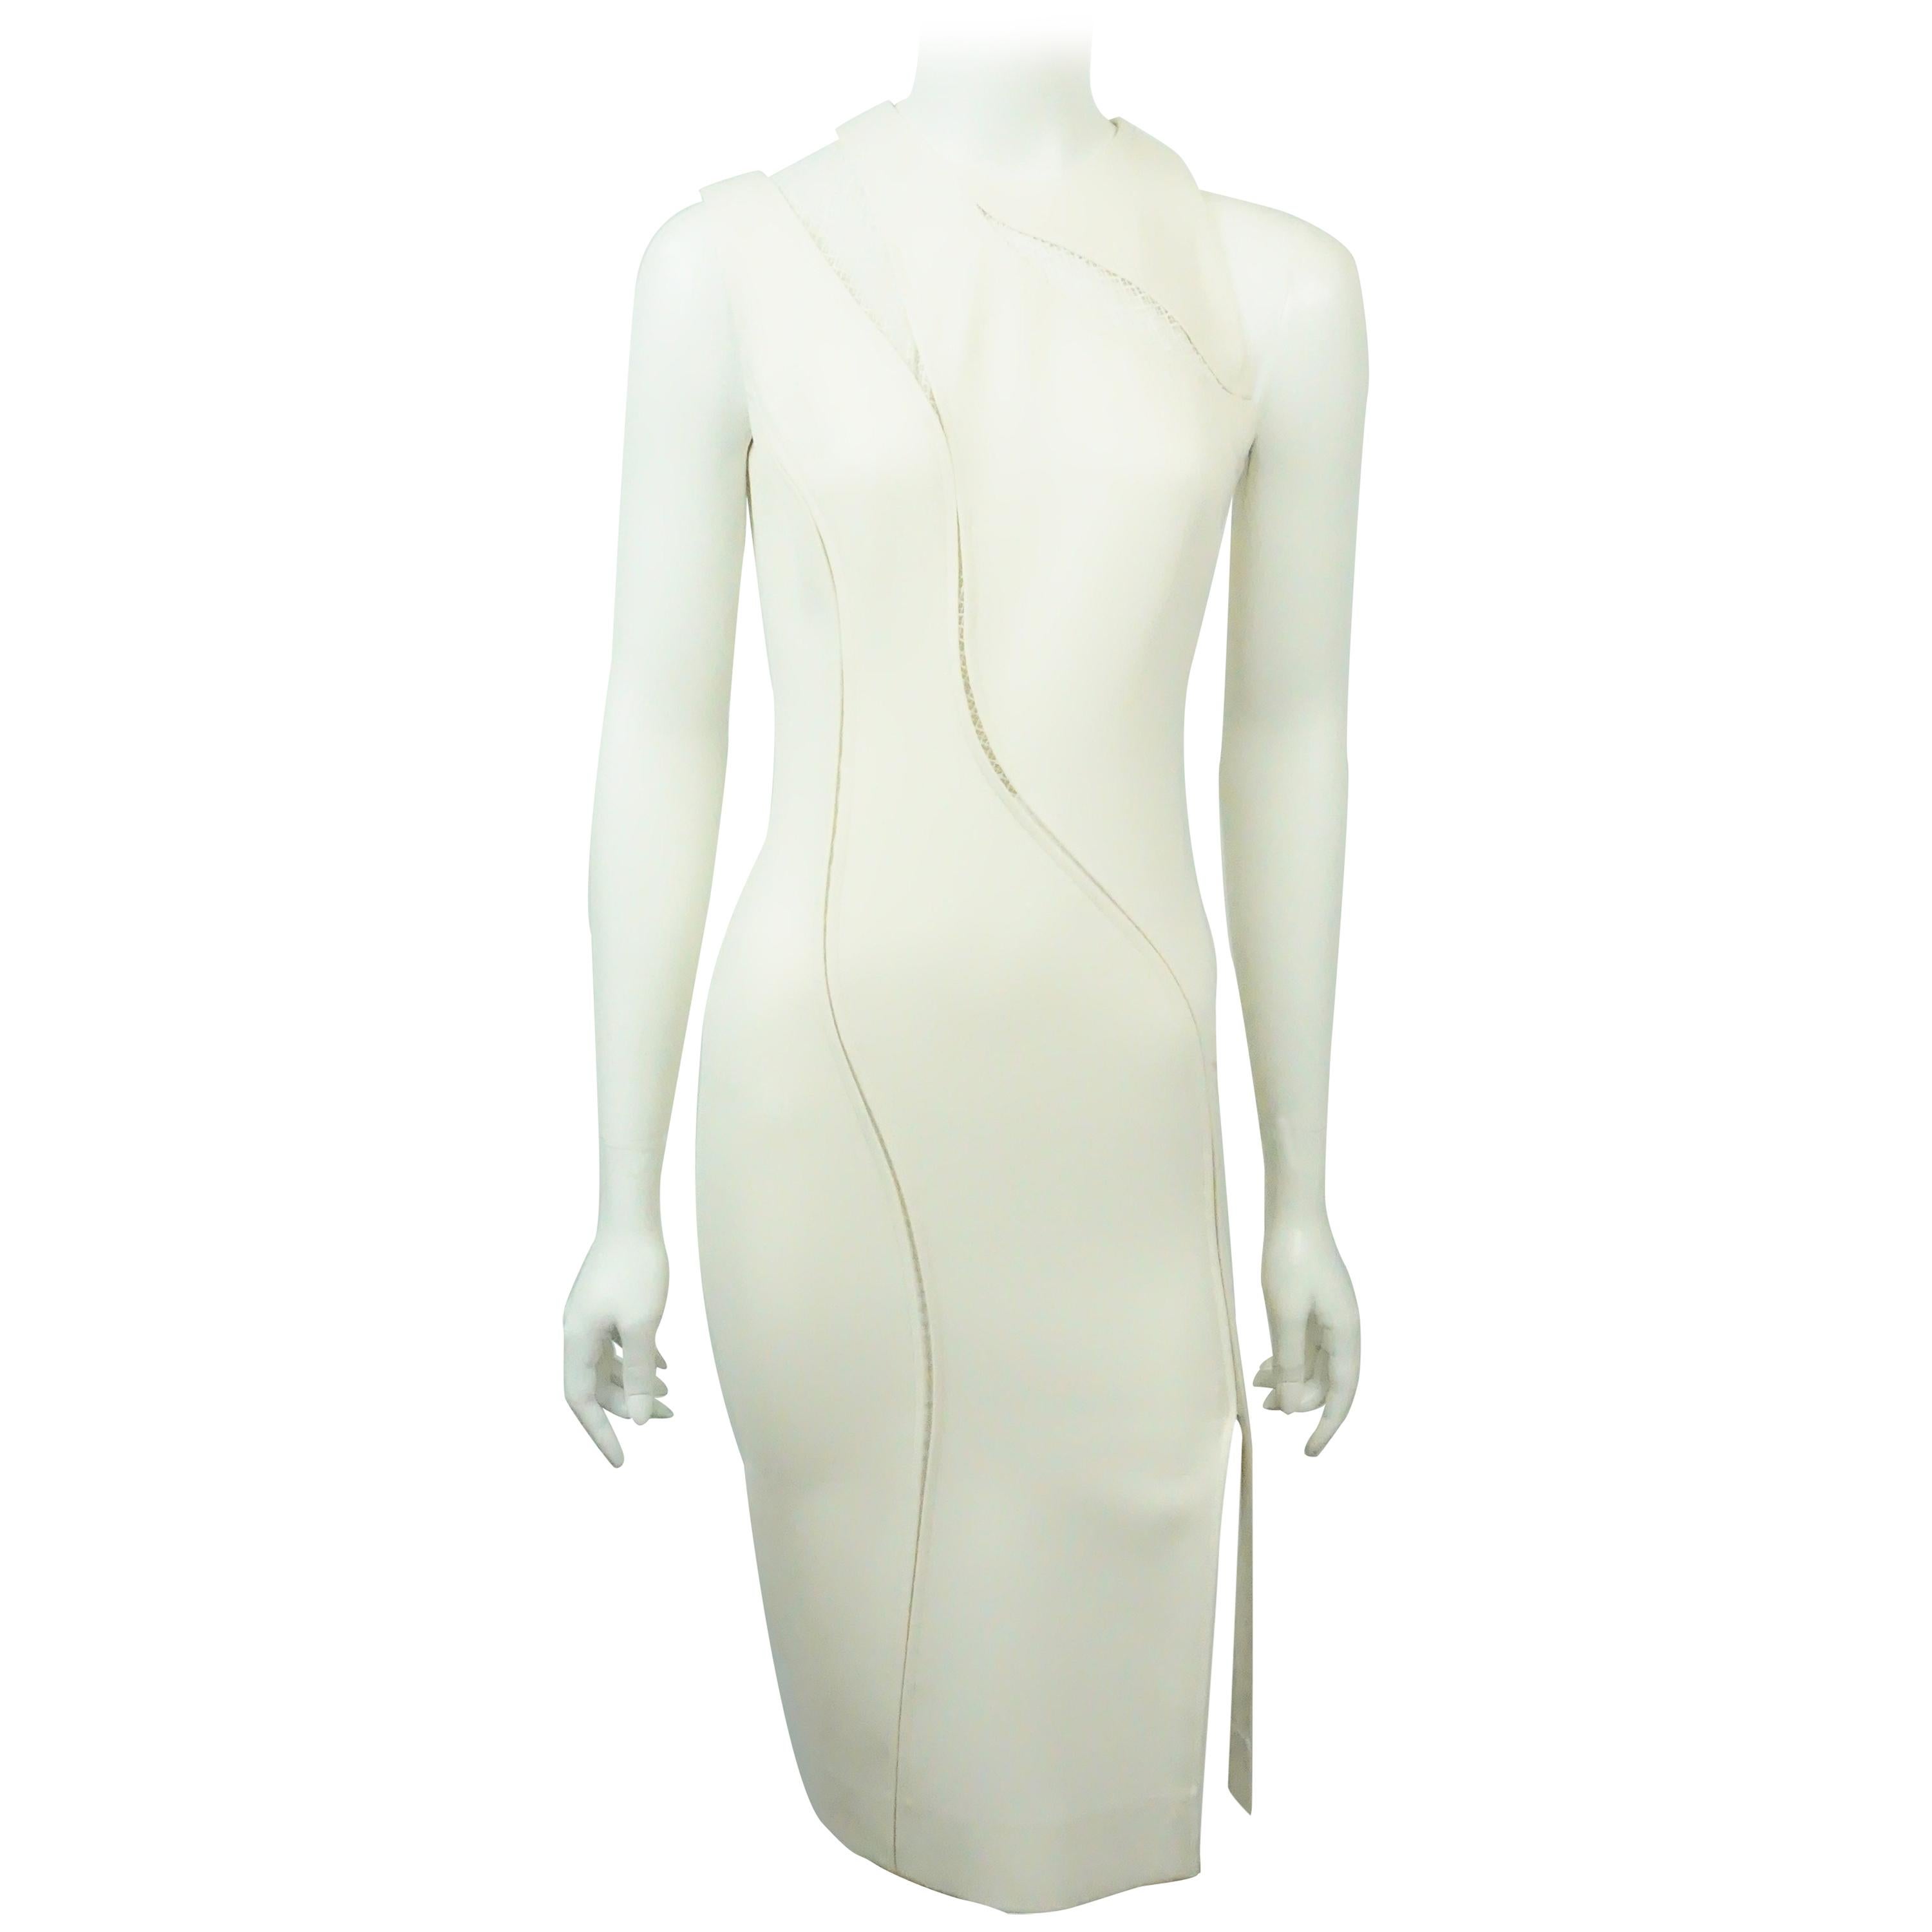 Victoria Beckham Ivory Dress-4 For Sale